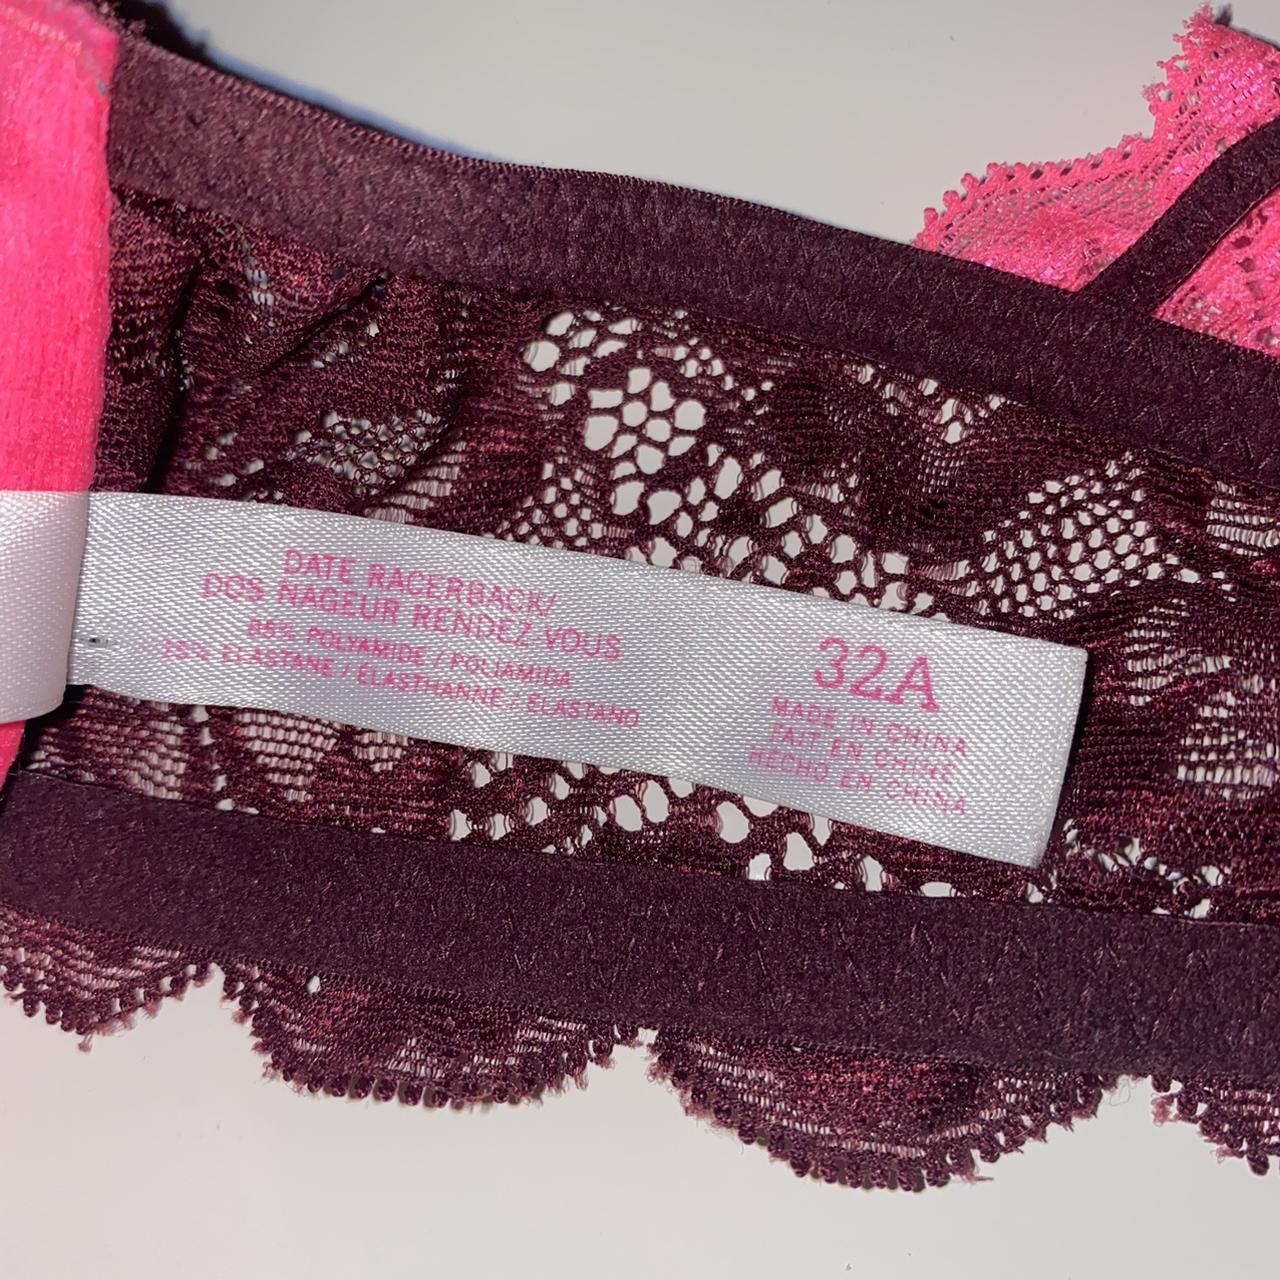 Victoria's Secret PINK bra size 32a